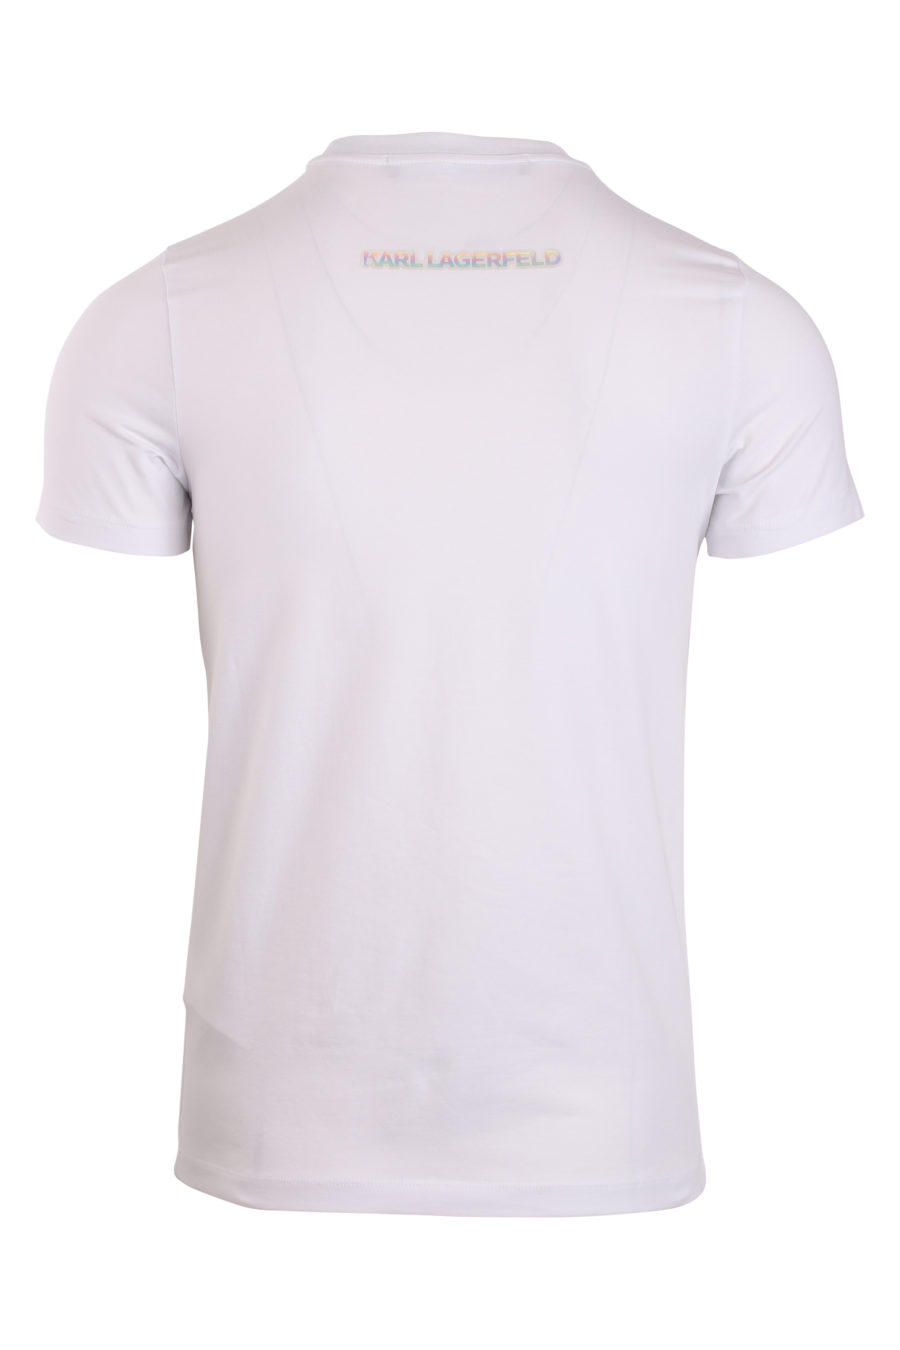 Camiseta blanca con logo en silueta tornasol pequeño - IMG 0865